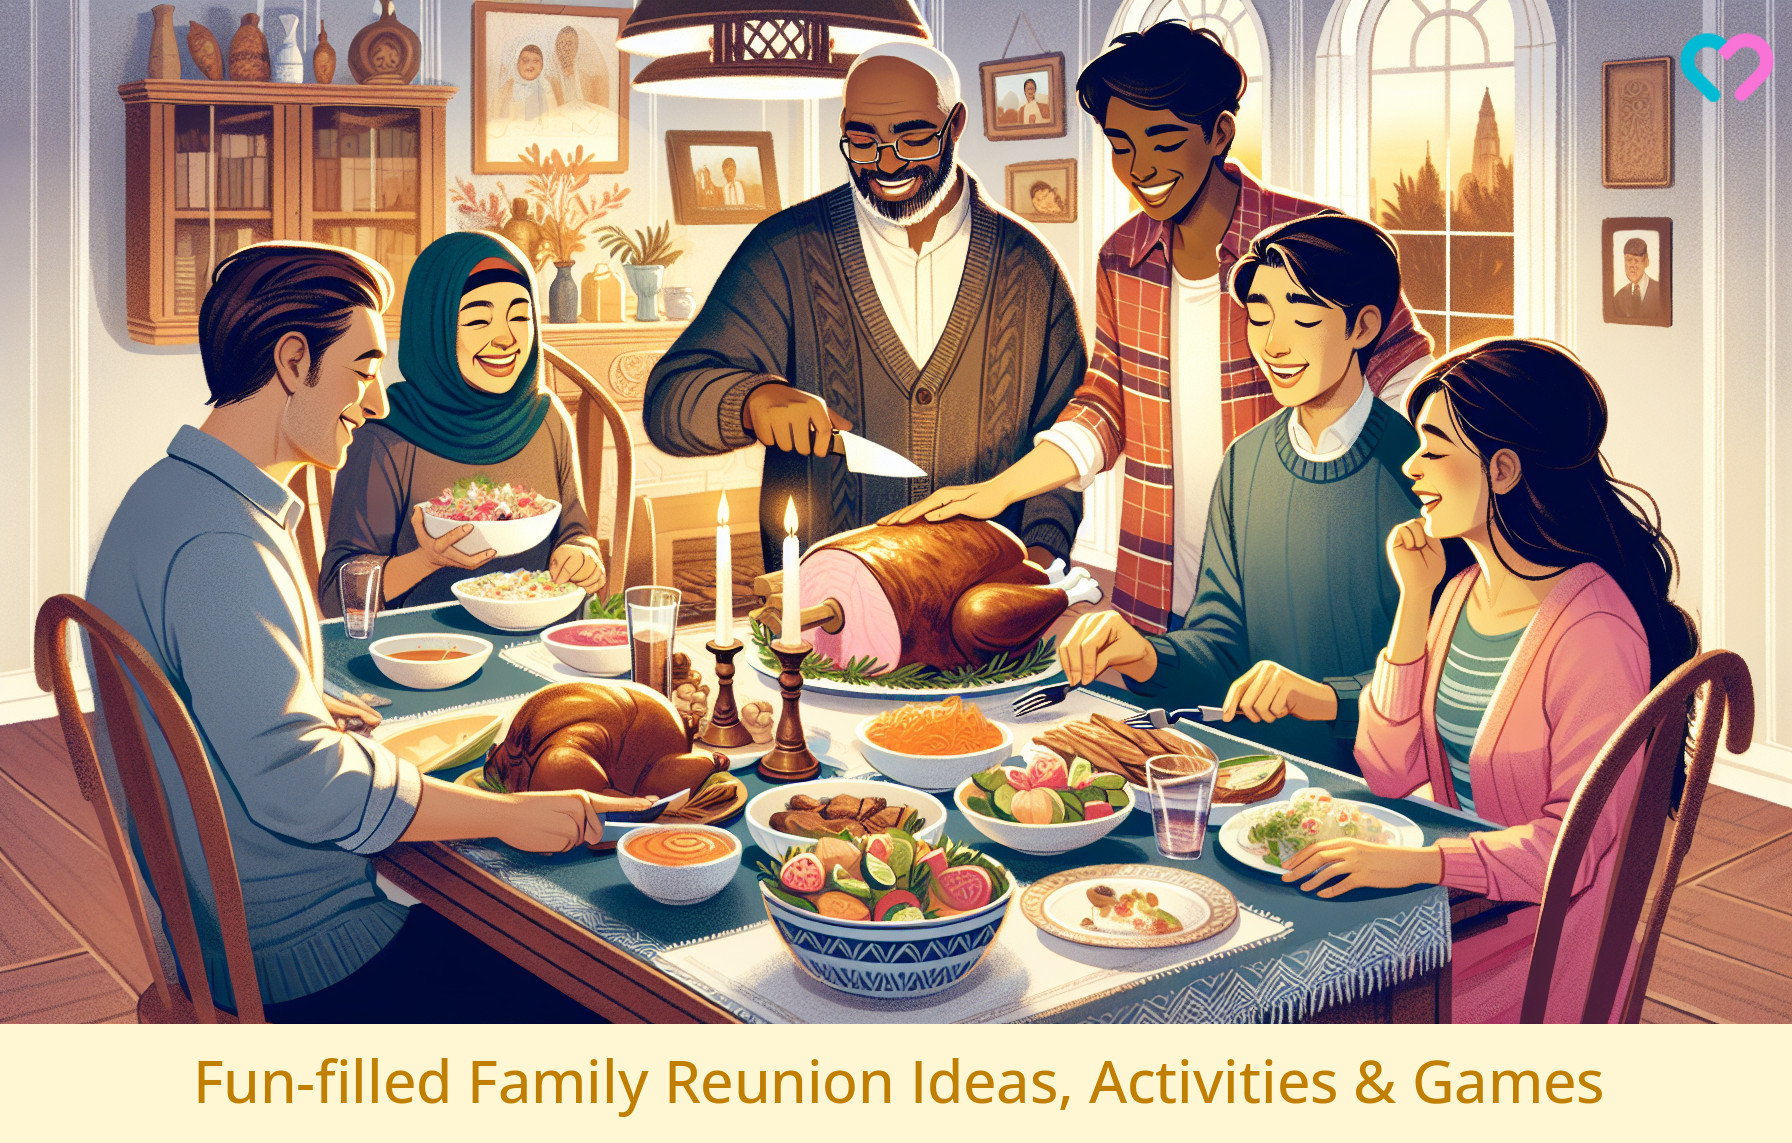 Family reunion ideas_illustration